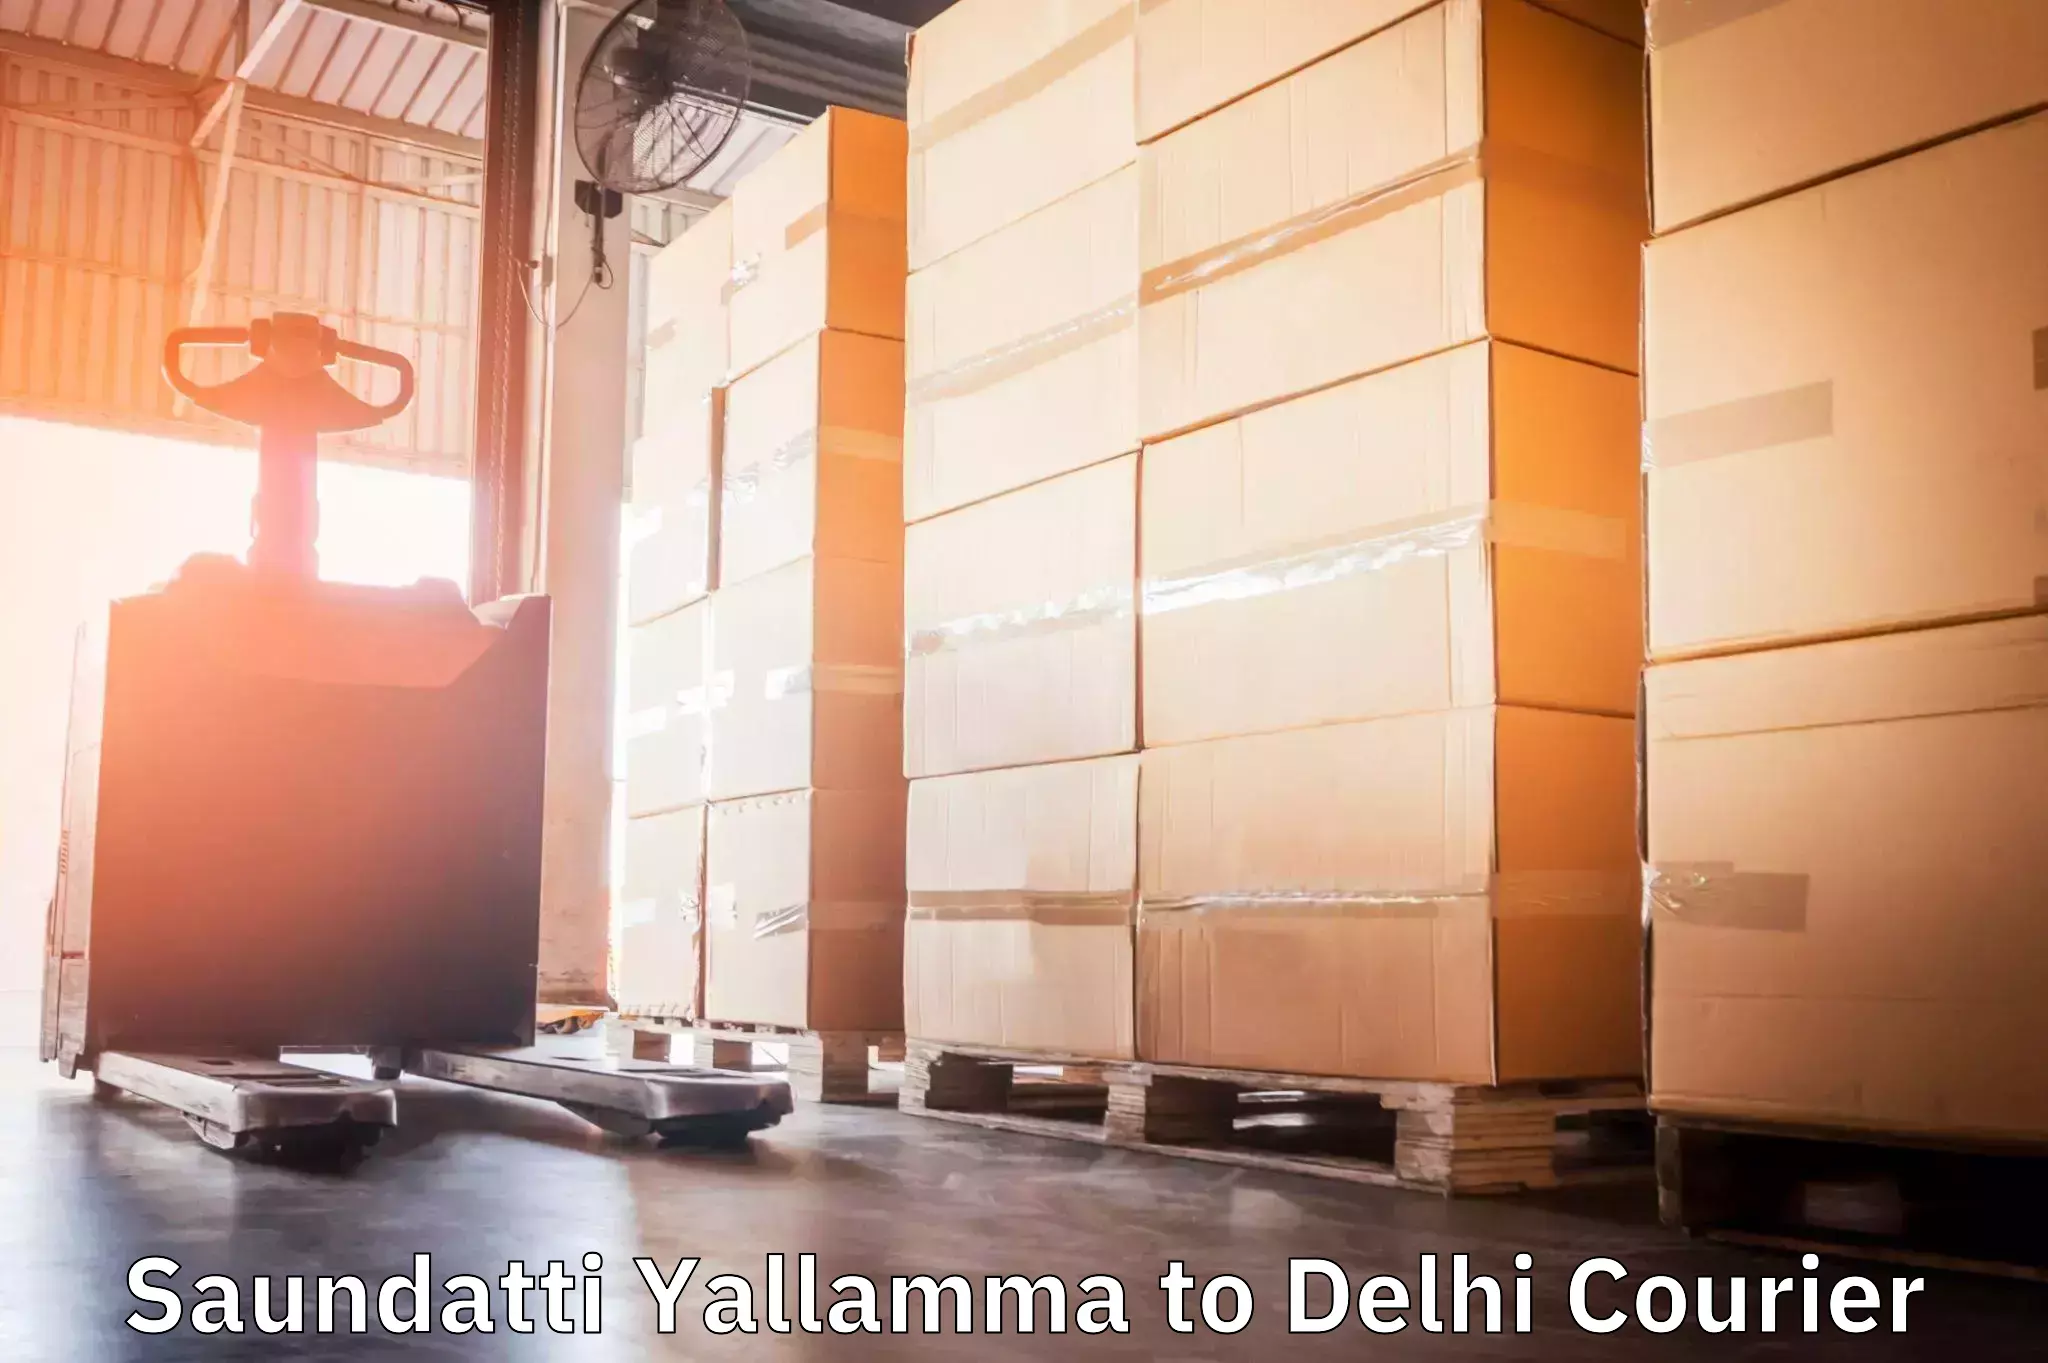 Advanced courier platforms Saundatti Yallamma to Delhi